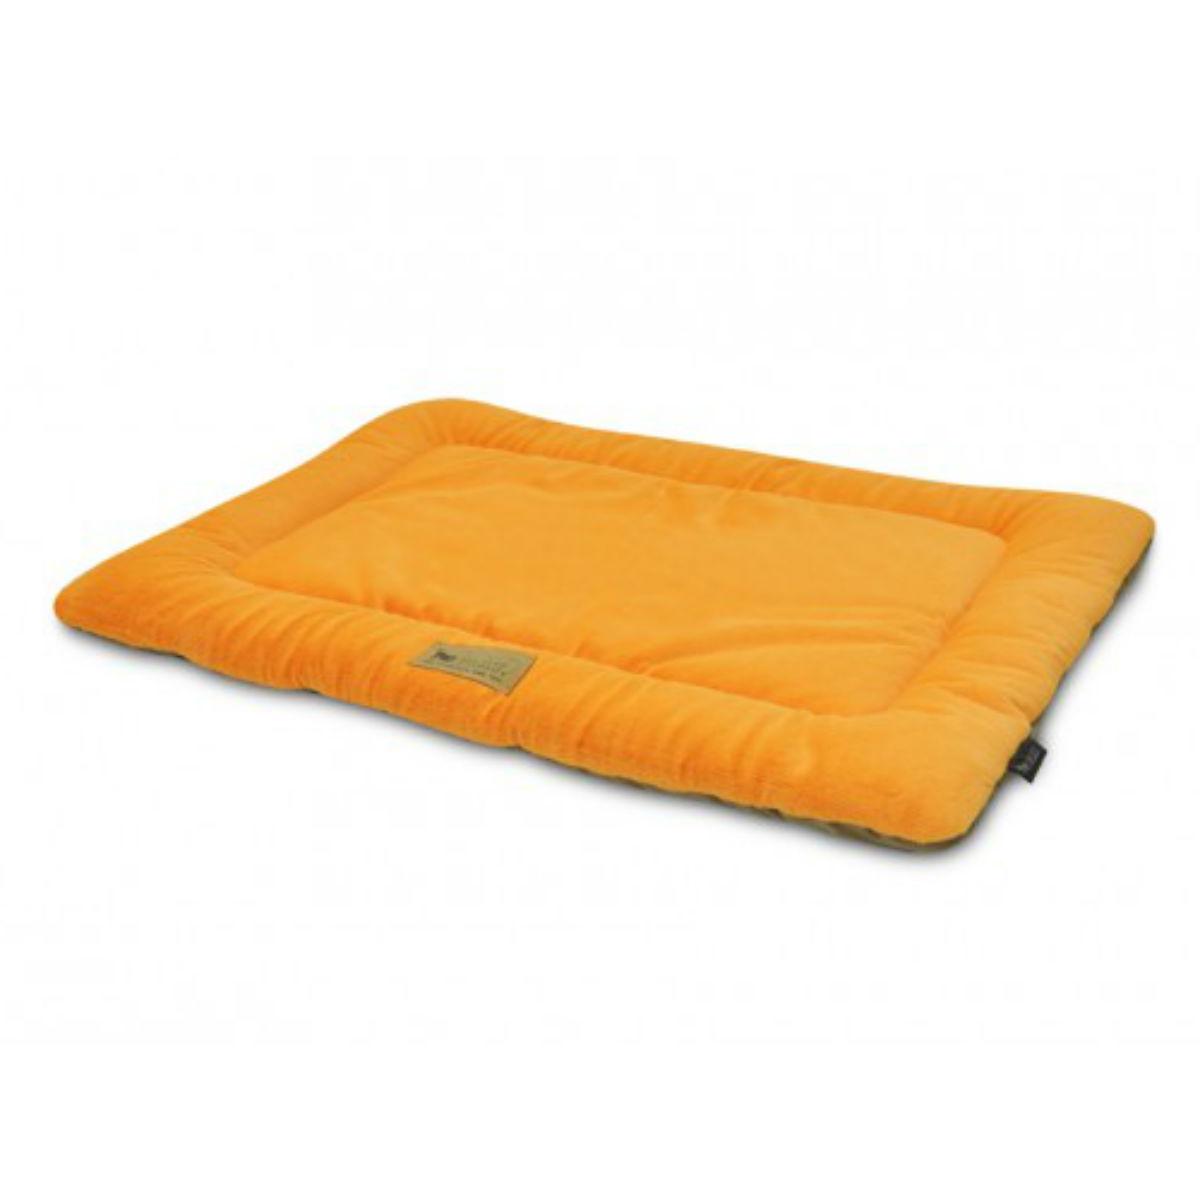 P.L.A.Y. Chill Pad Pet Bed - Orange/Hazelnut